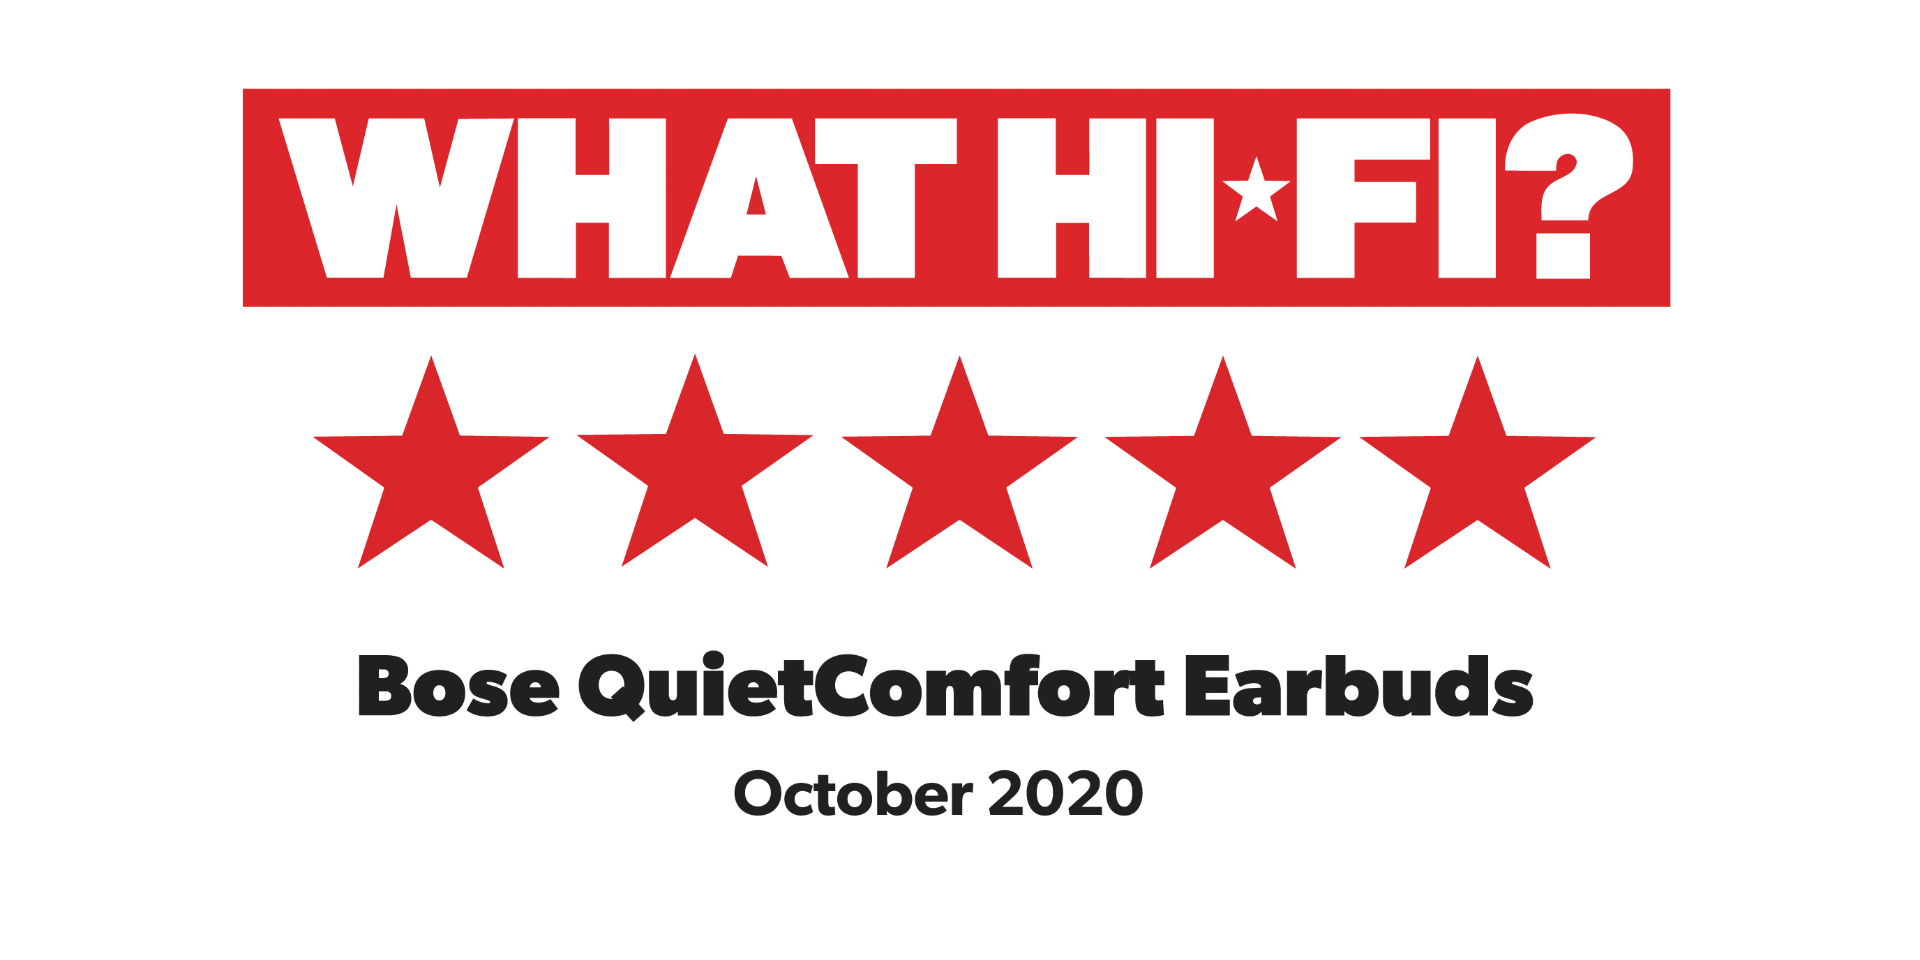 What Hi-Fi?, 5 stars, Bose QuietComfort Earbuds, October 2020 logo